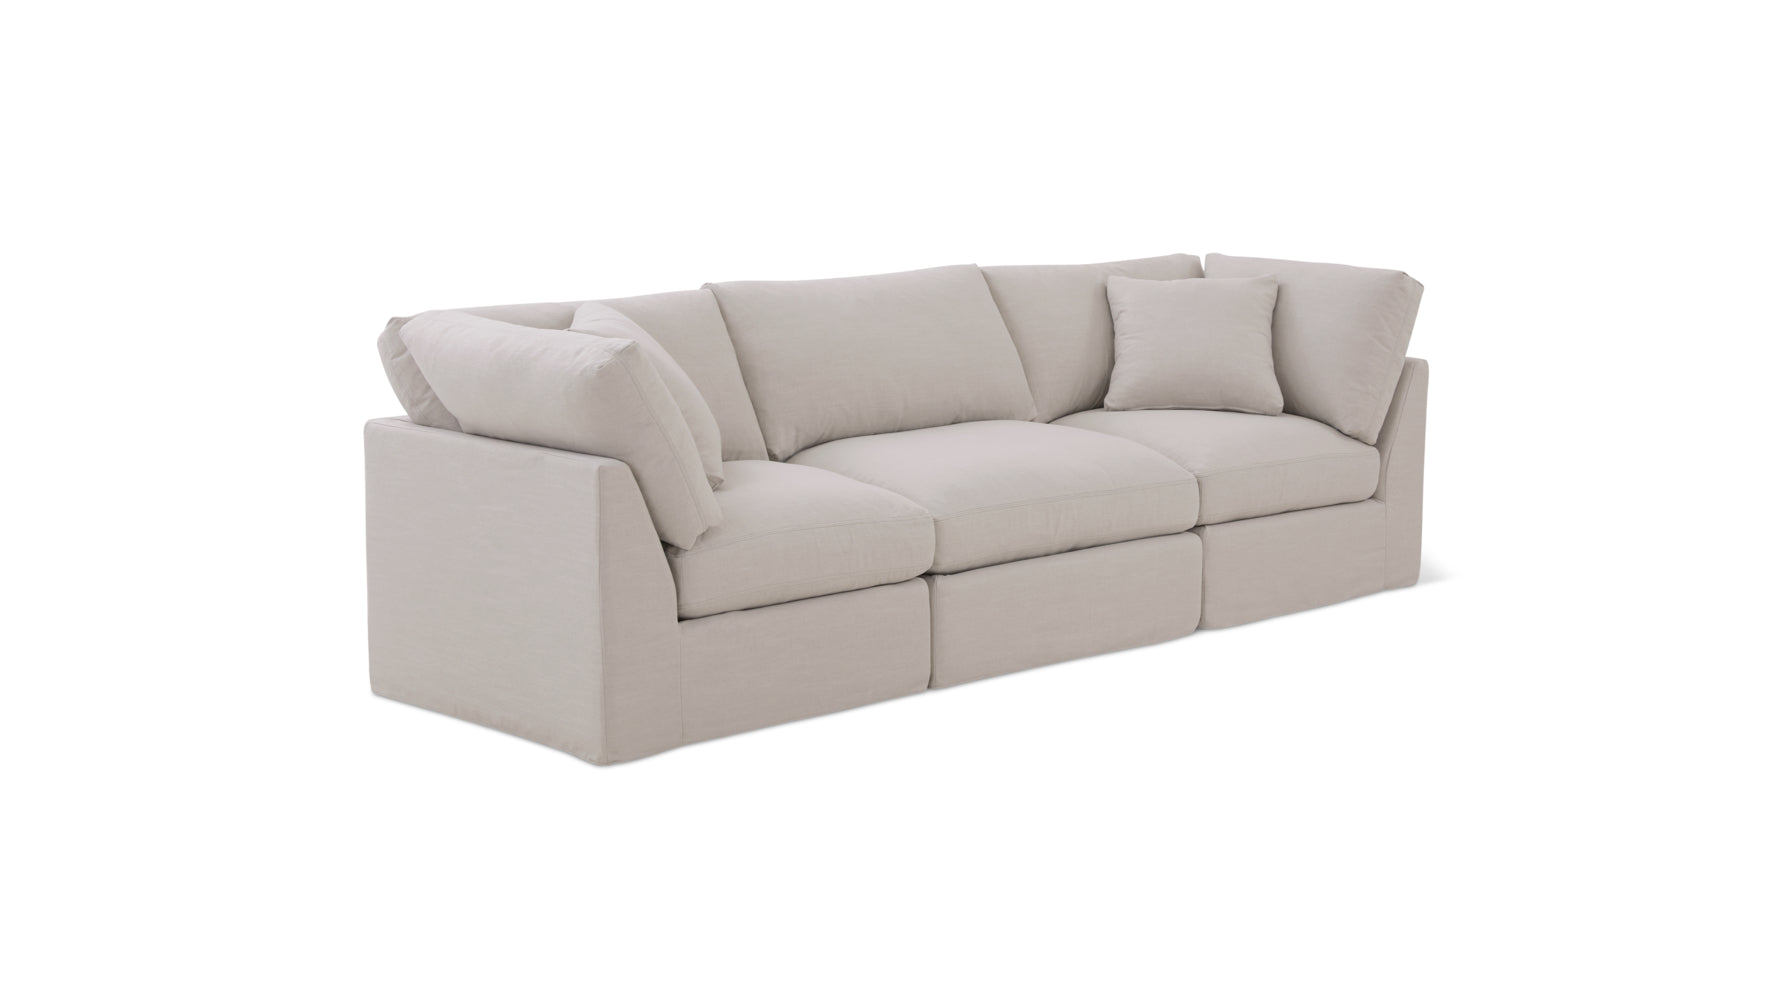 Get Together™ 3-Piece Modular Sofa, Standard, Clay - Image 2